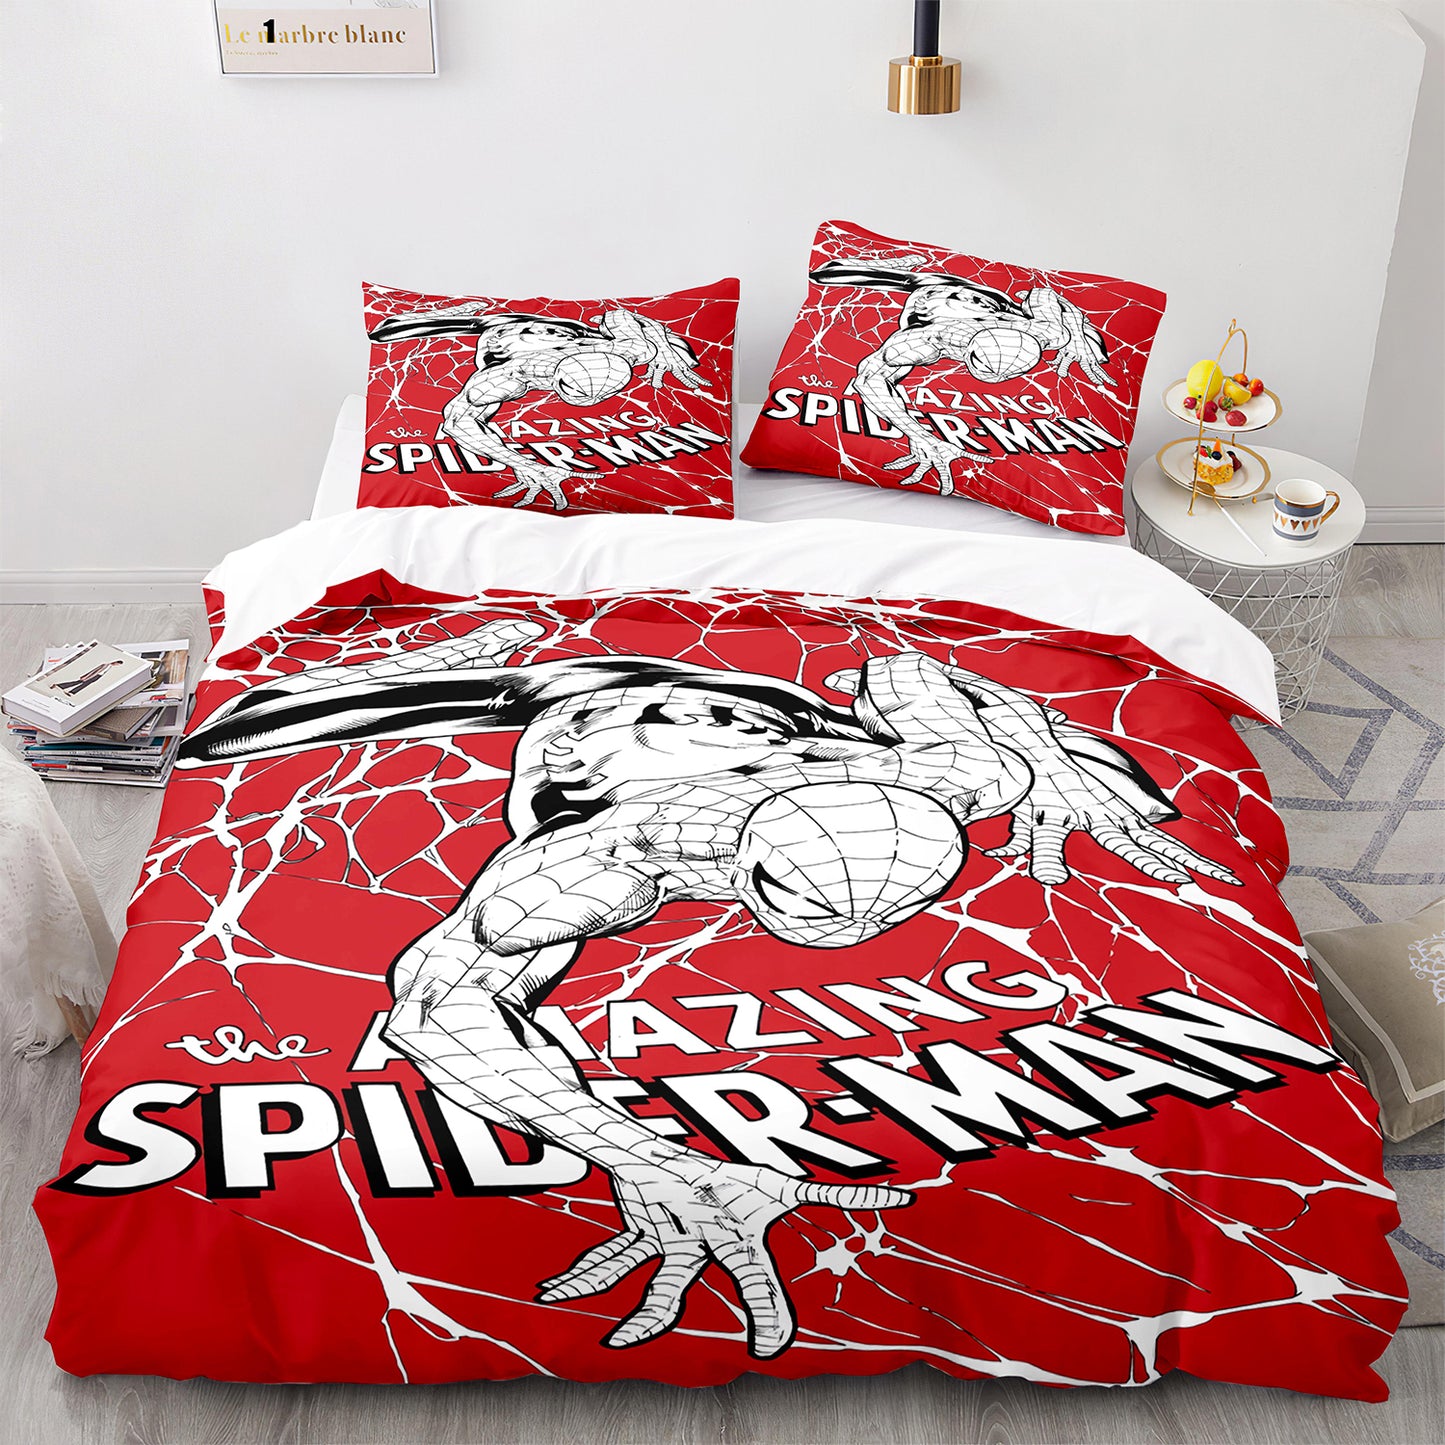 Amazing Spider-man Comforter Set